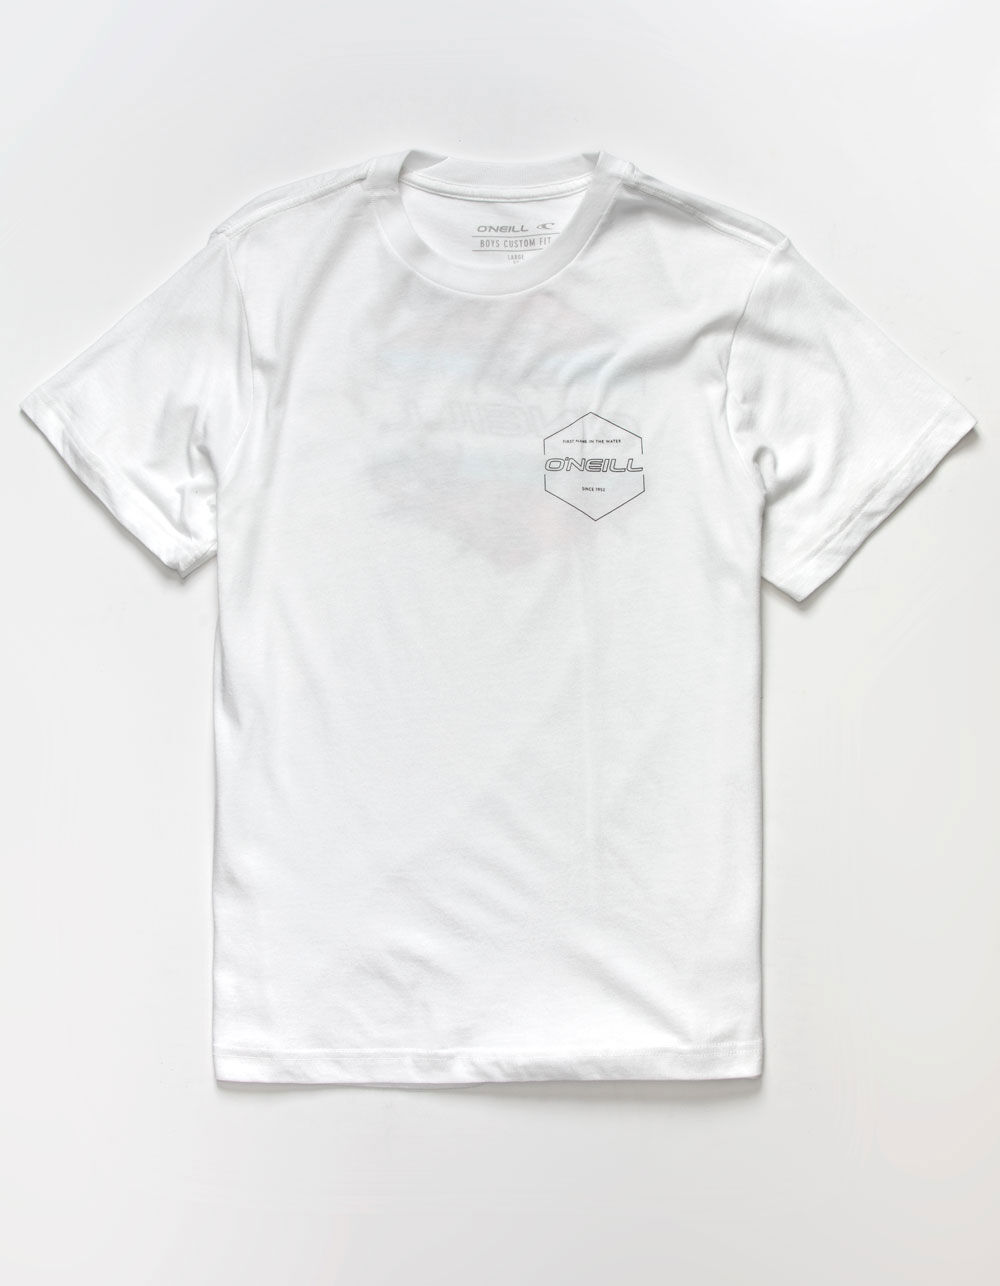 O'NEILL Floral Fade Boys T-Shirt - WHITE | Tillys